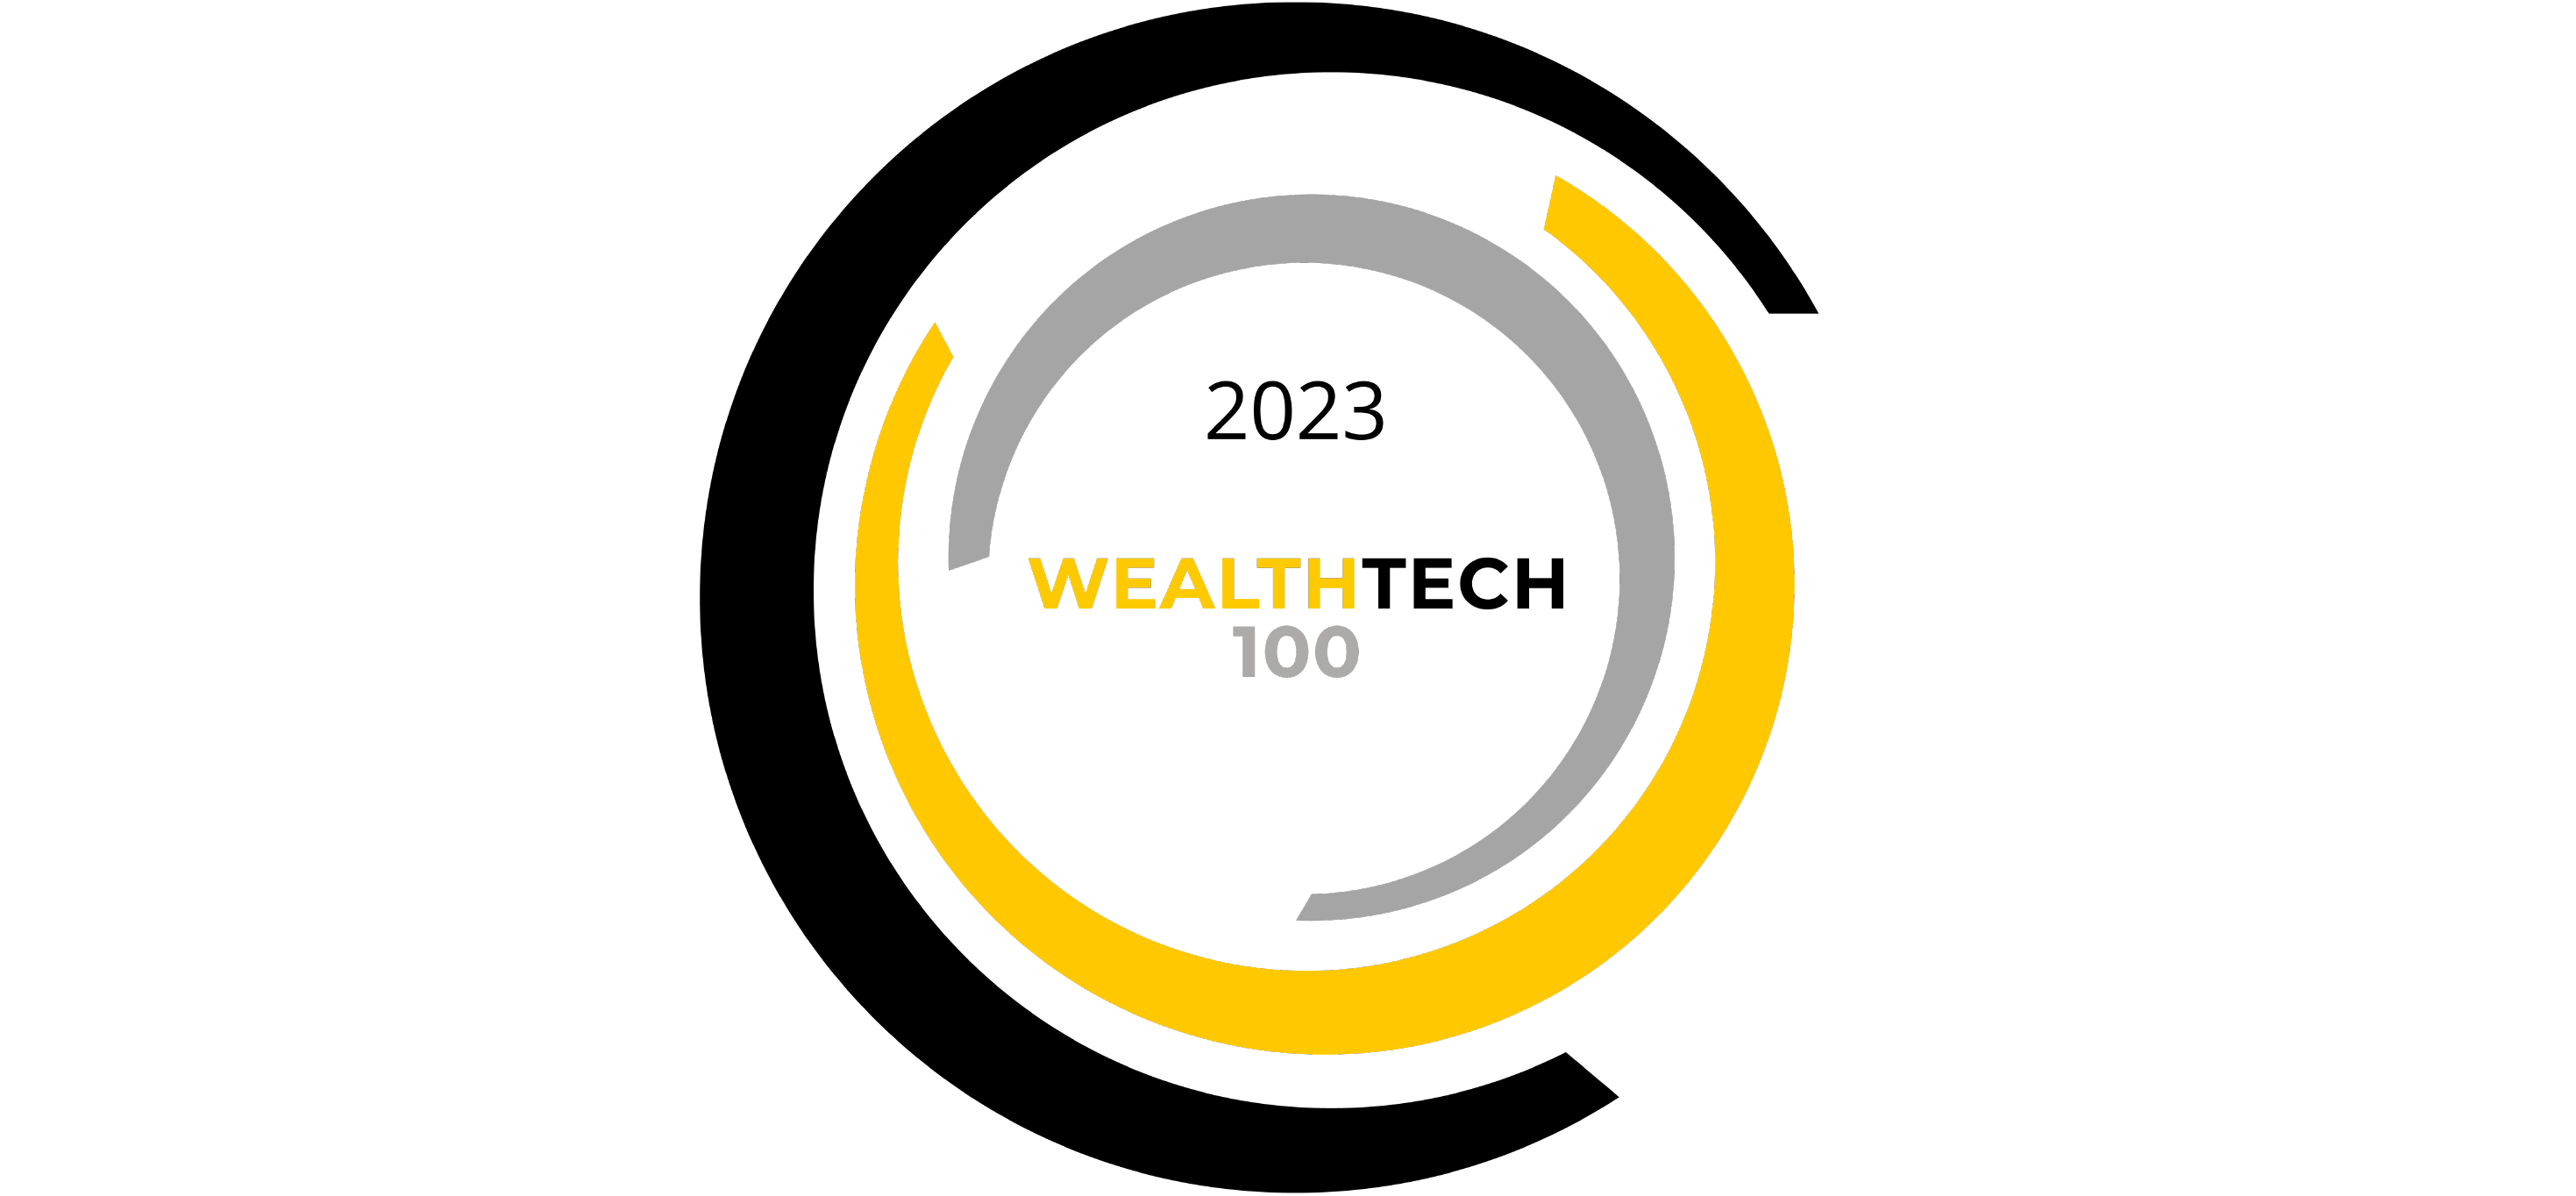 2023 Wealthtech 100 award logo